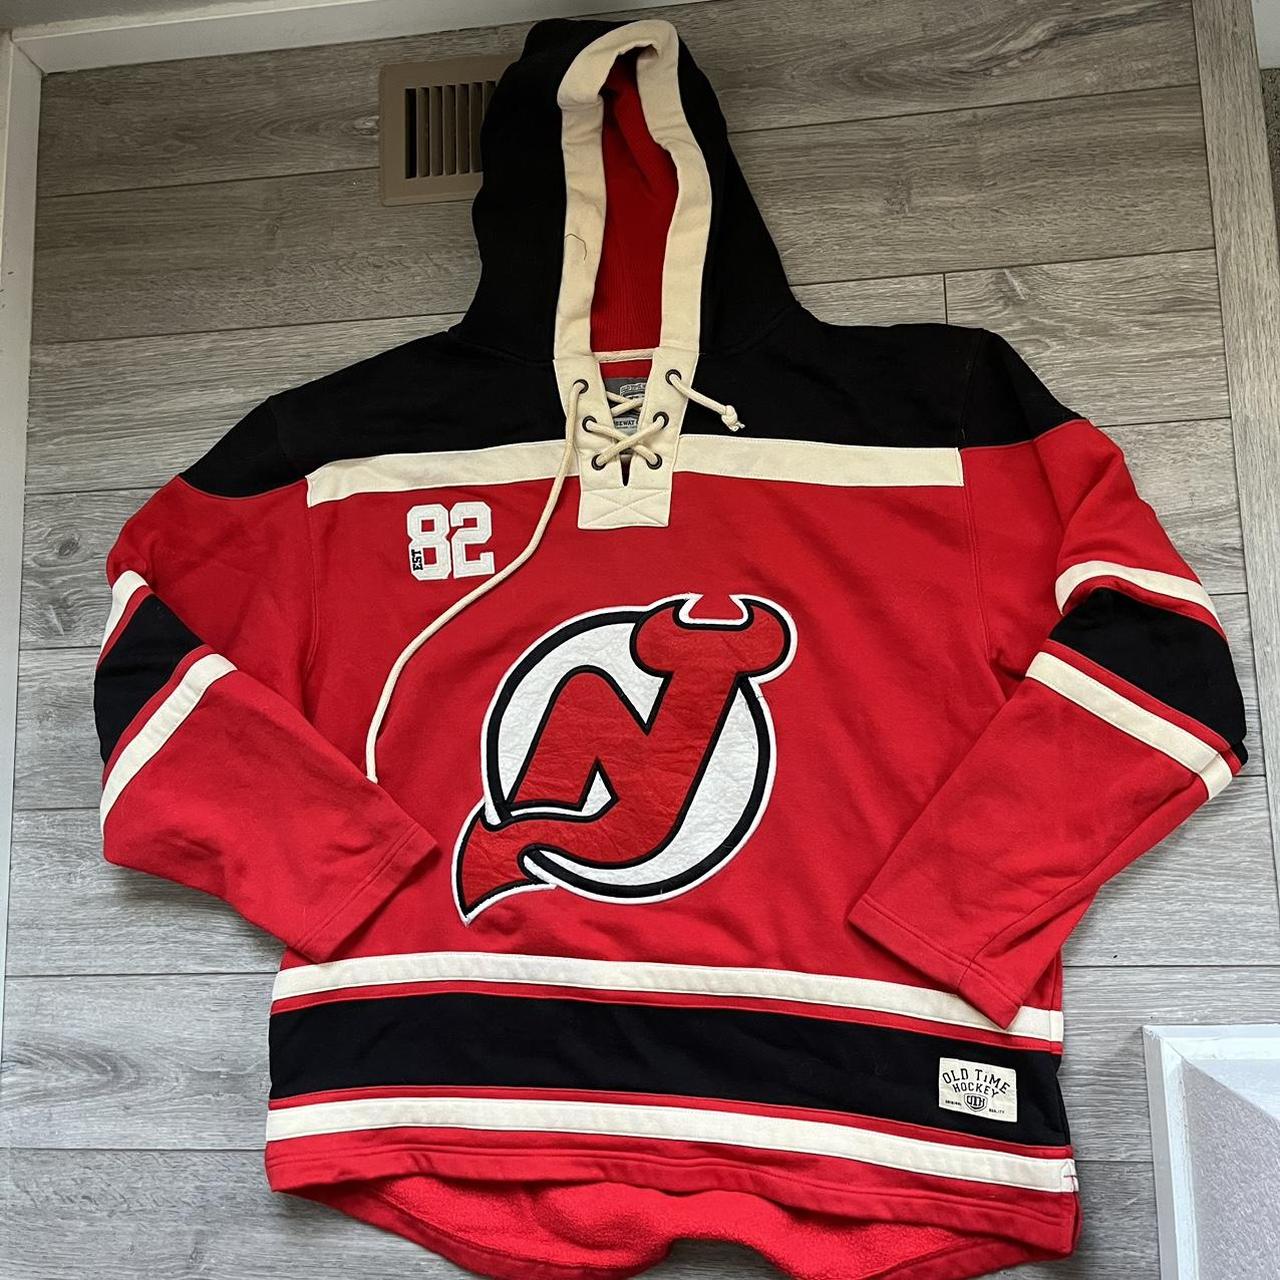 Vintage NHL Lee Sports New Jersey Devils Sweatshirt XL